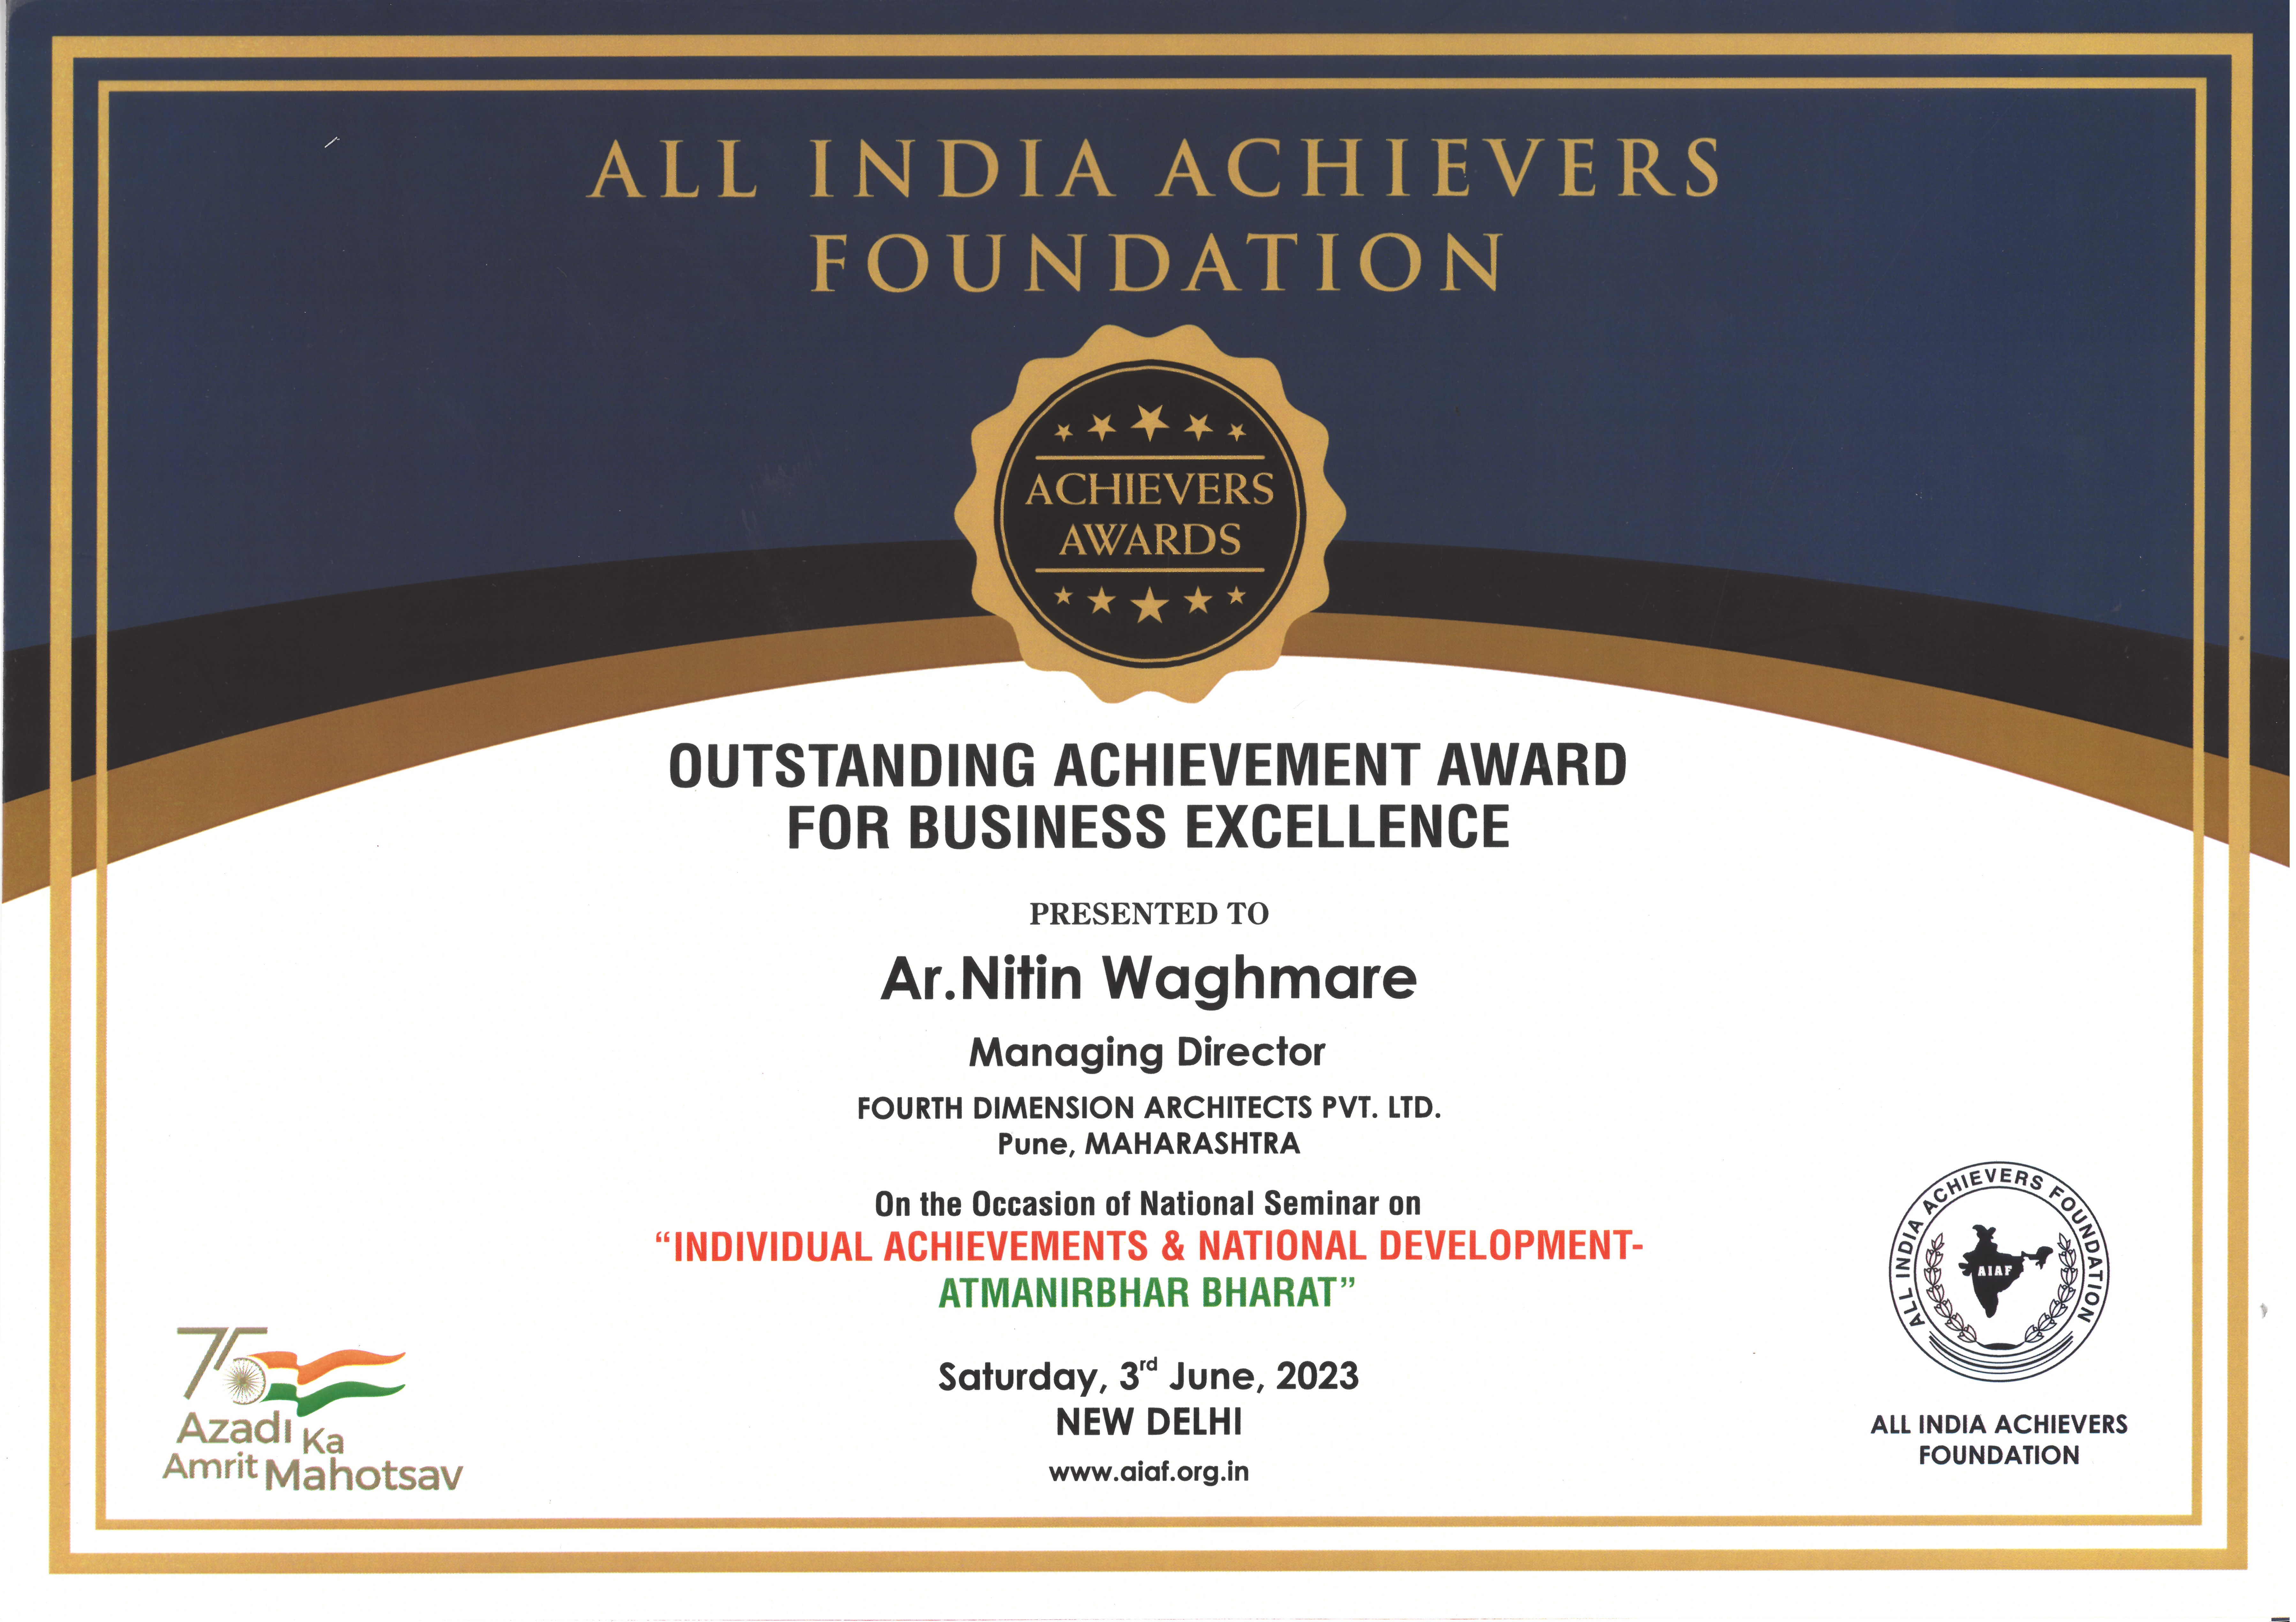 All India Achievers Foundation, Delhi